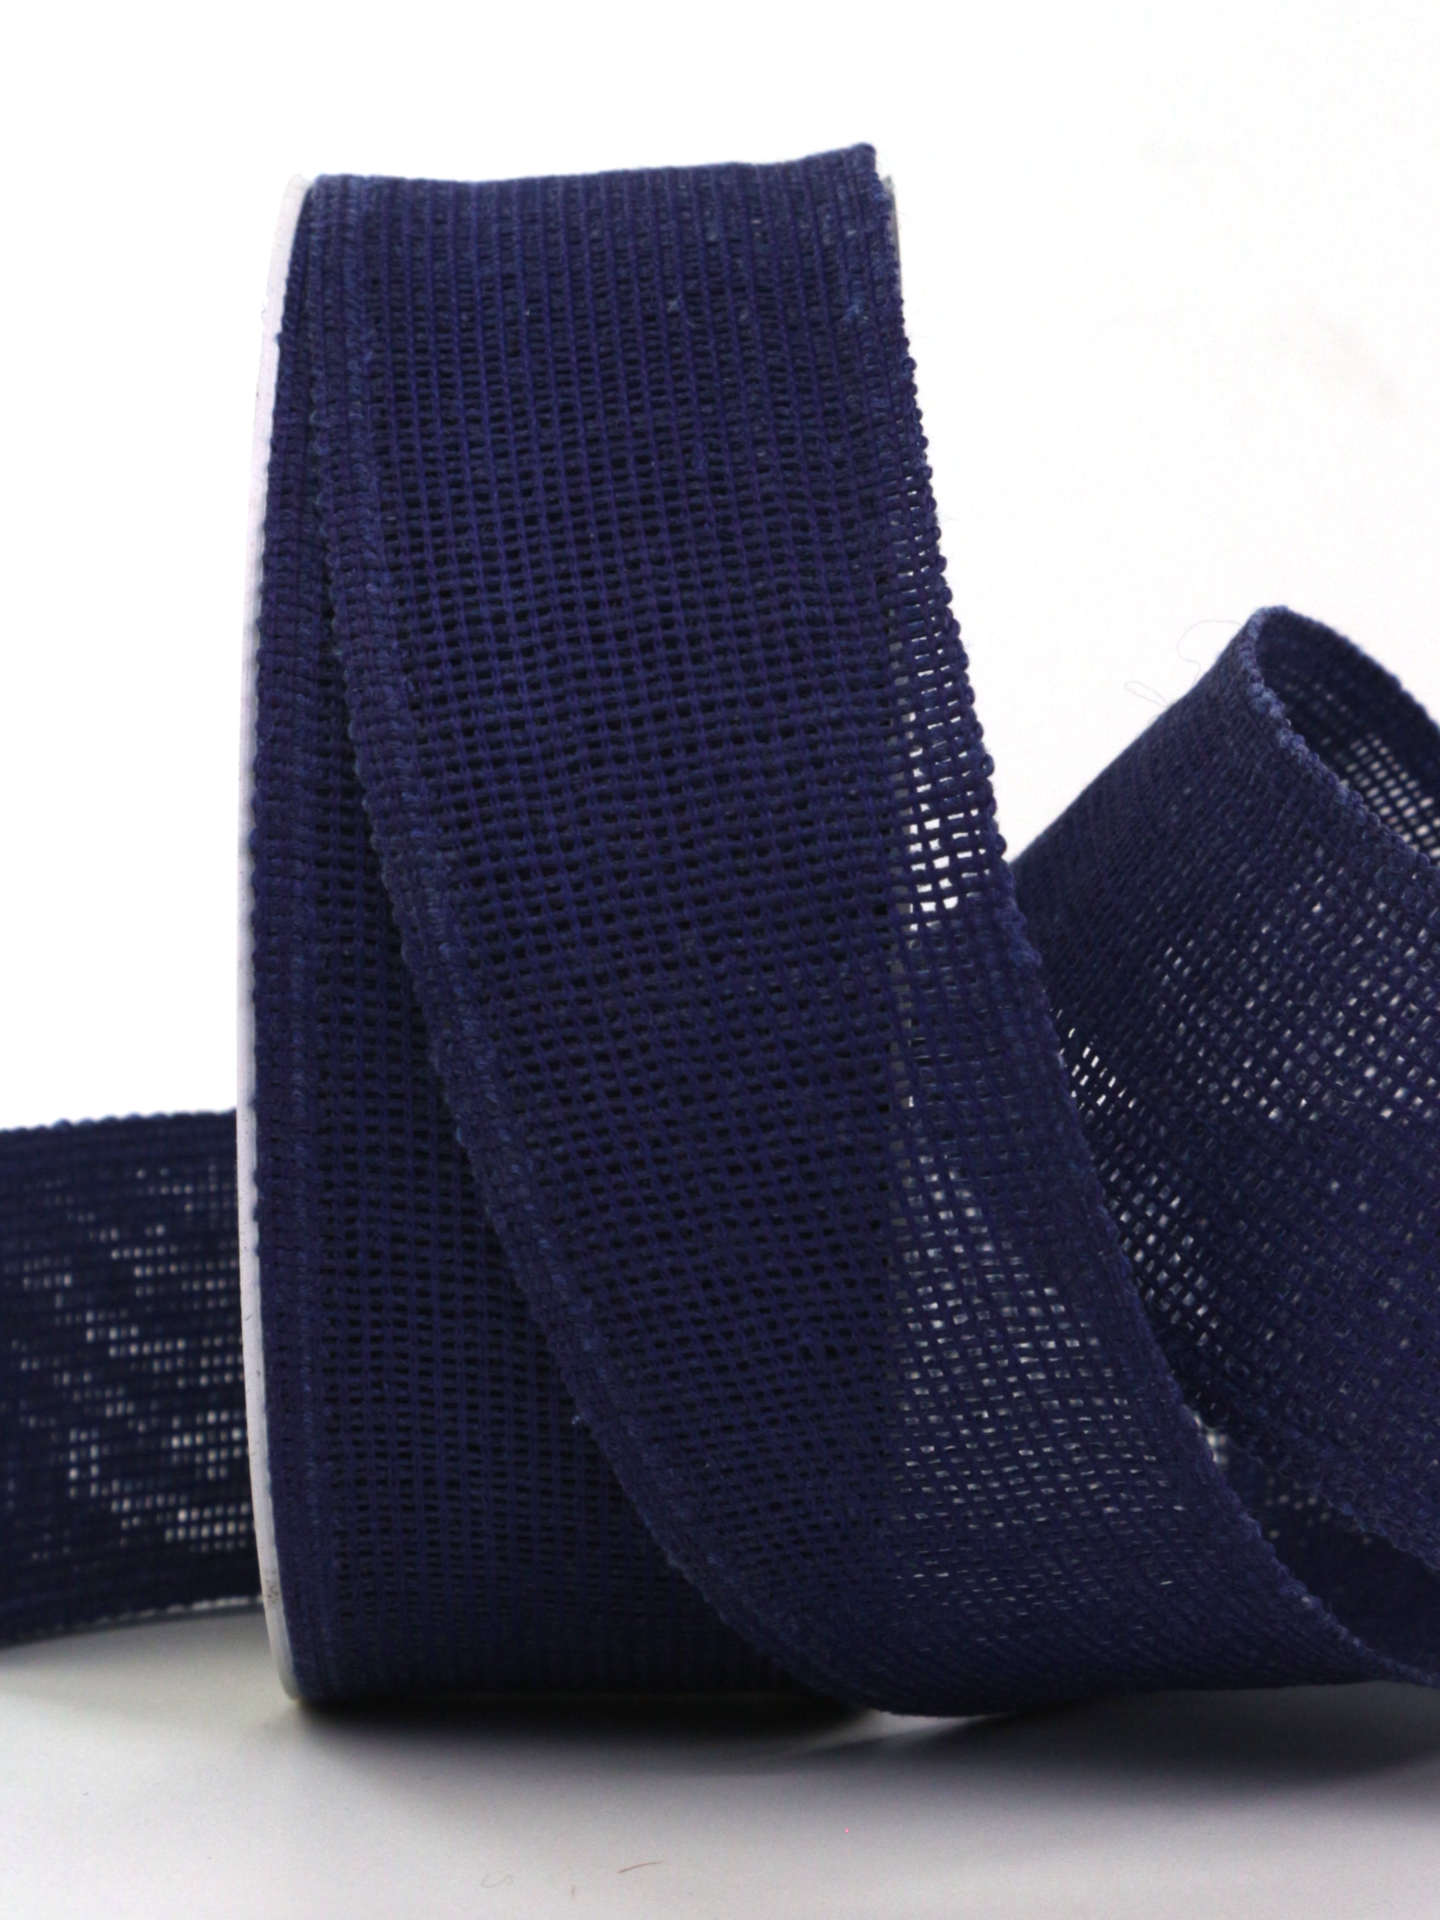 Feines Gitterband, outdoor, dunkelblau, 40 mm breit, 10 m Rolle - dekoband, netzband, andere-baender, geschenkband, outdoor-bander